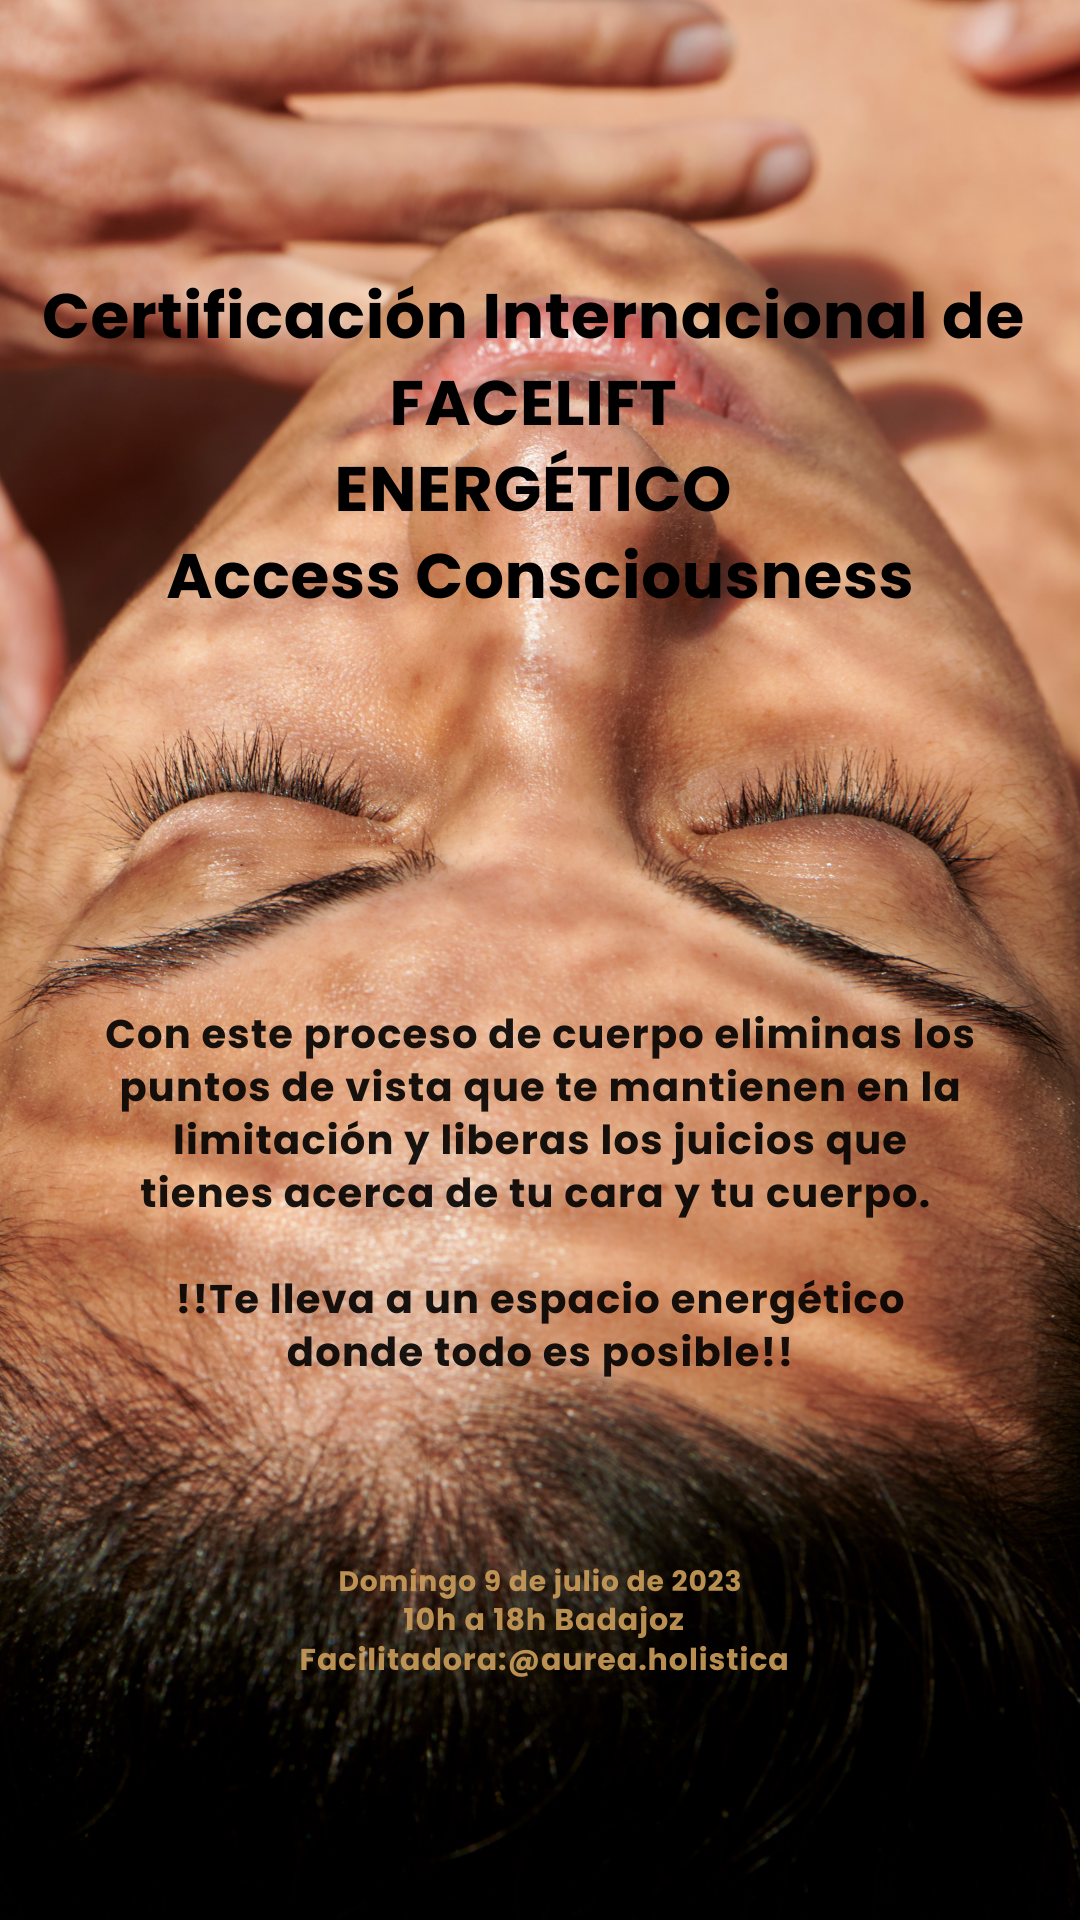 Curso de facelift energetico de access consciousness badajoz extremadura 78